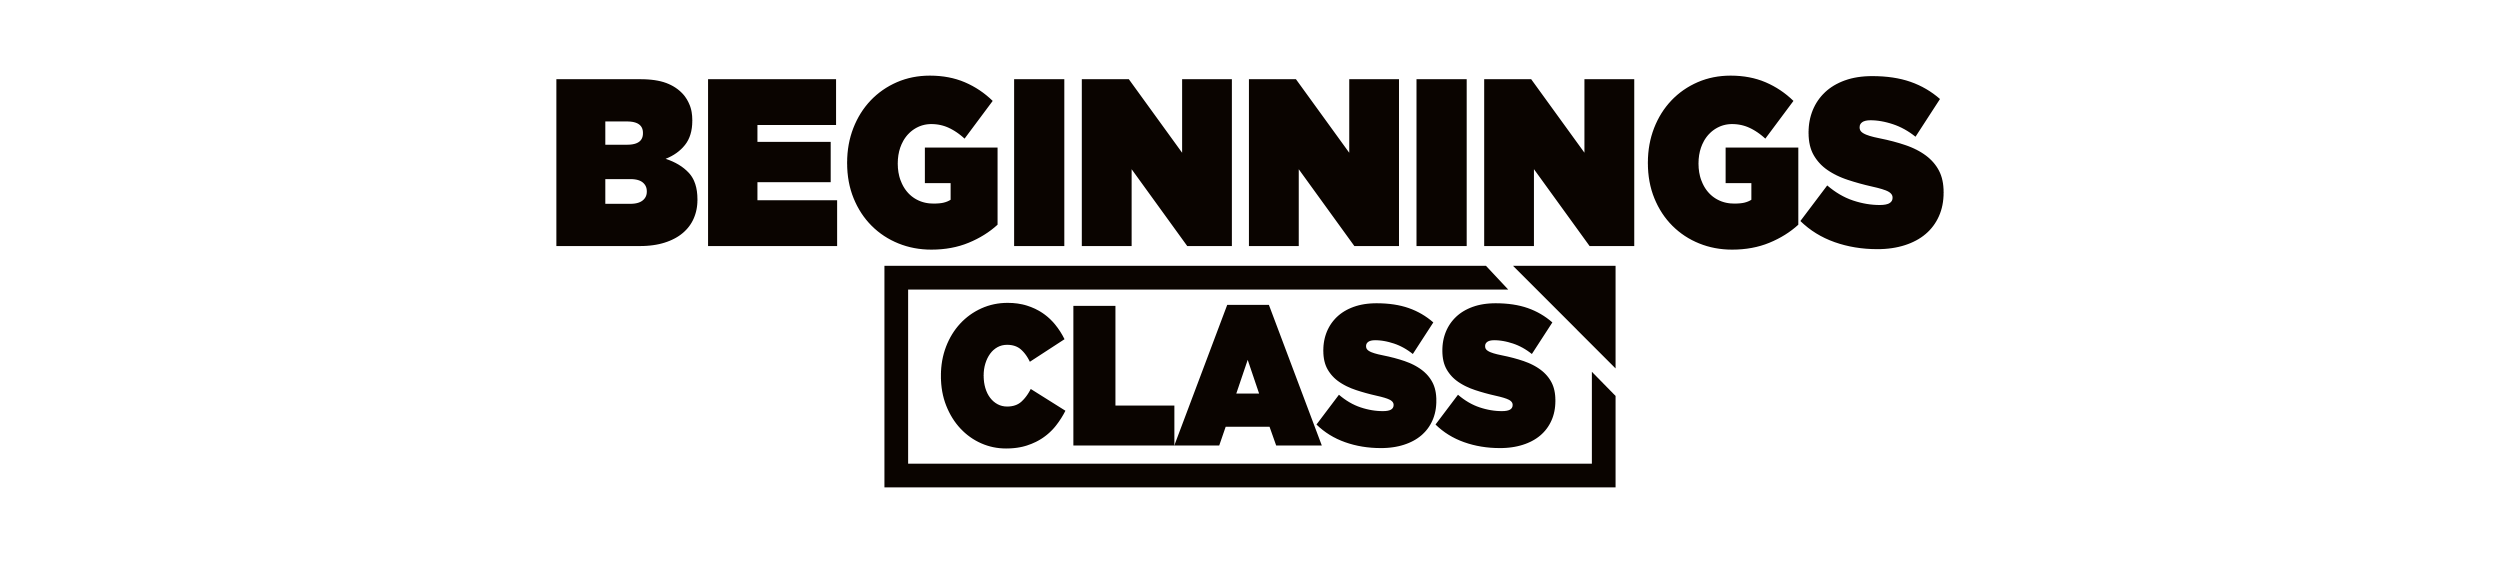 Beginnings Class Logo Stacked Black